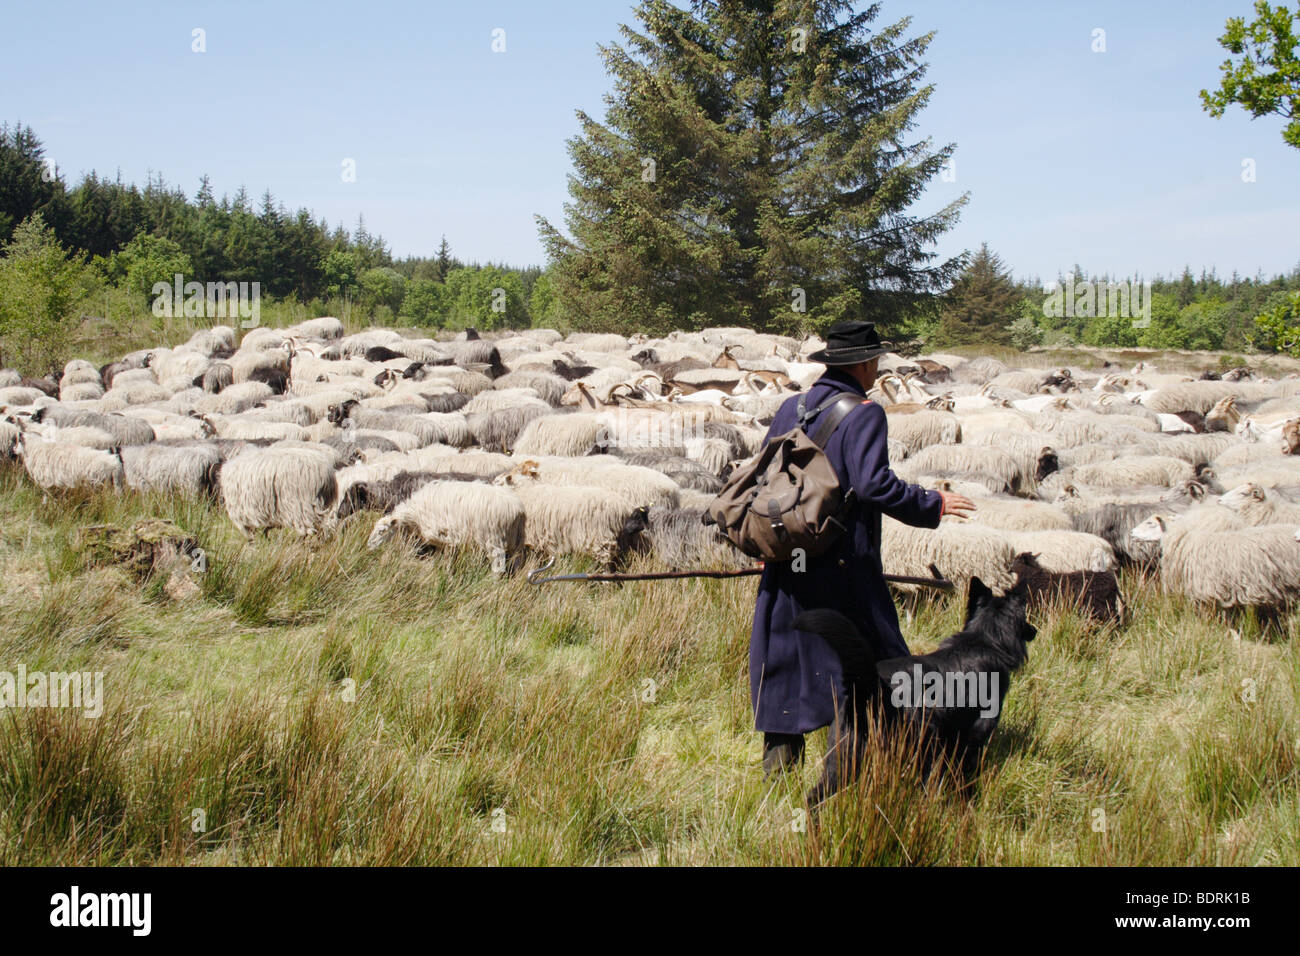 Wanderschaefer mit schafherde, sheepherder con zool. gregge di ovini Foto Stock